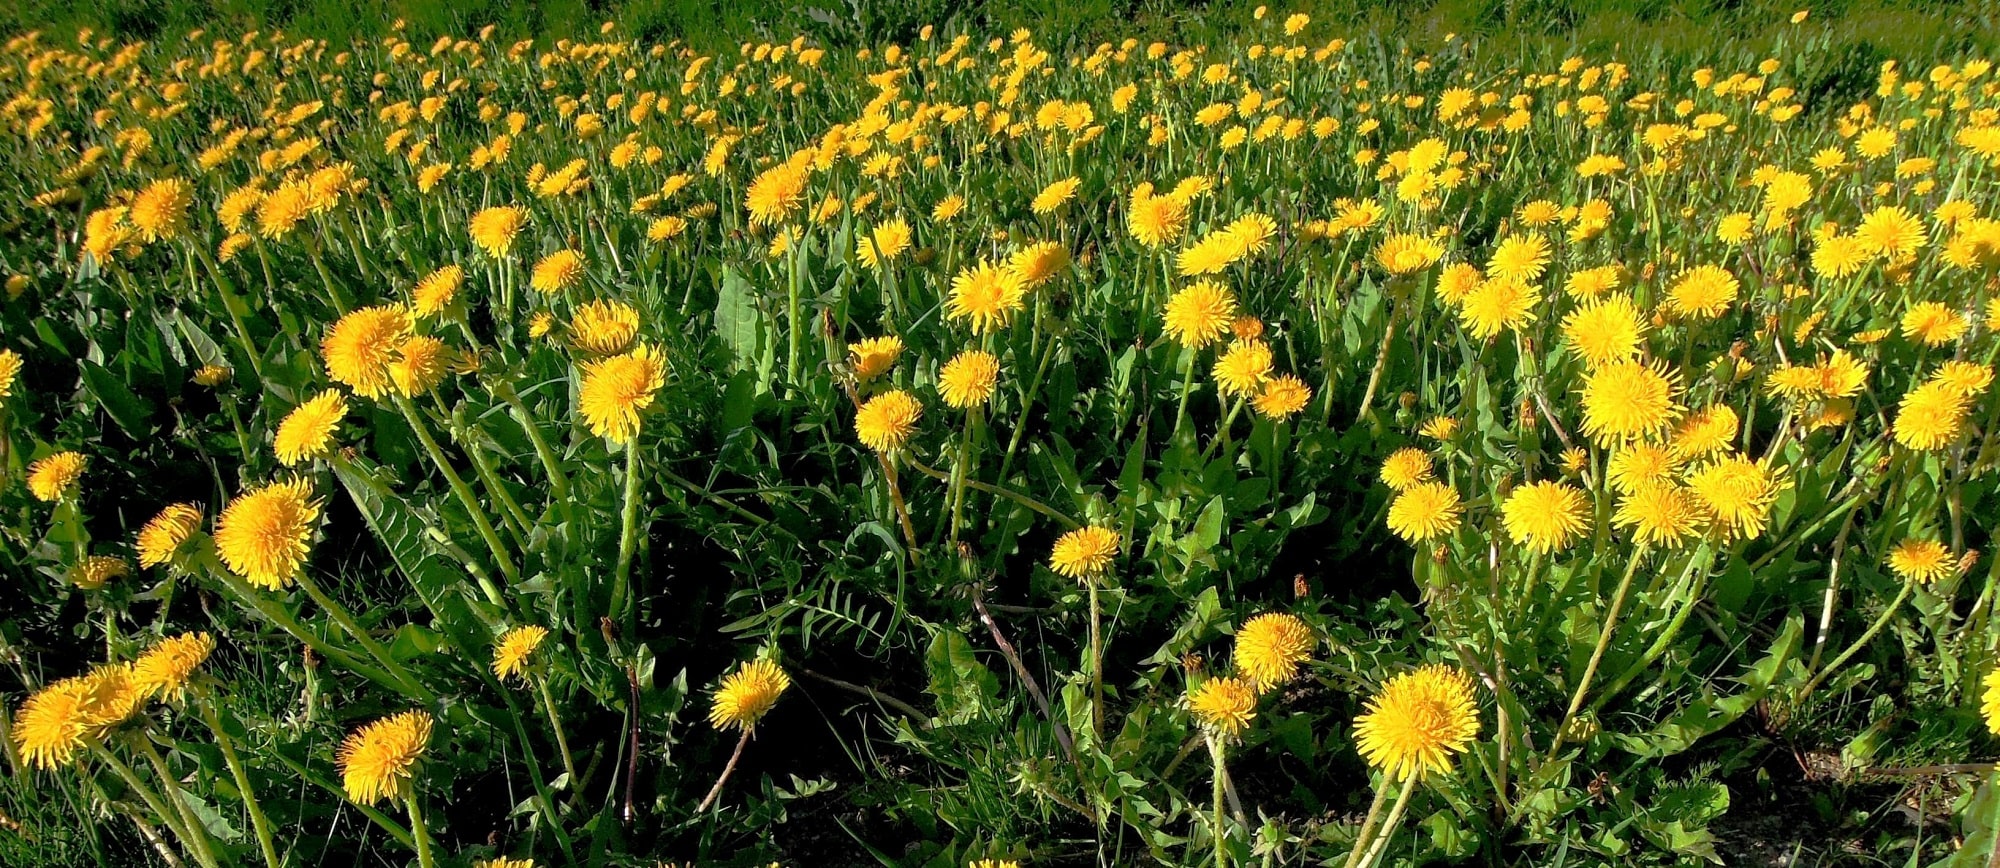 цветы одуванчика на поле